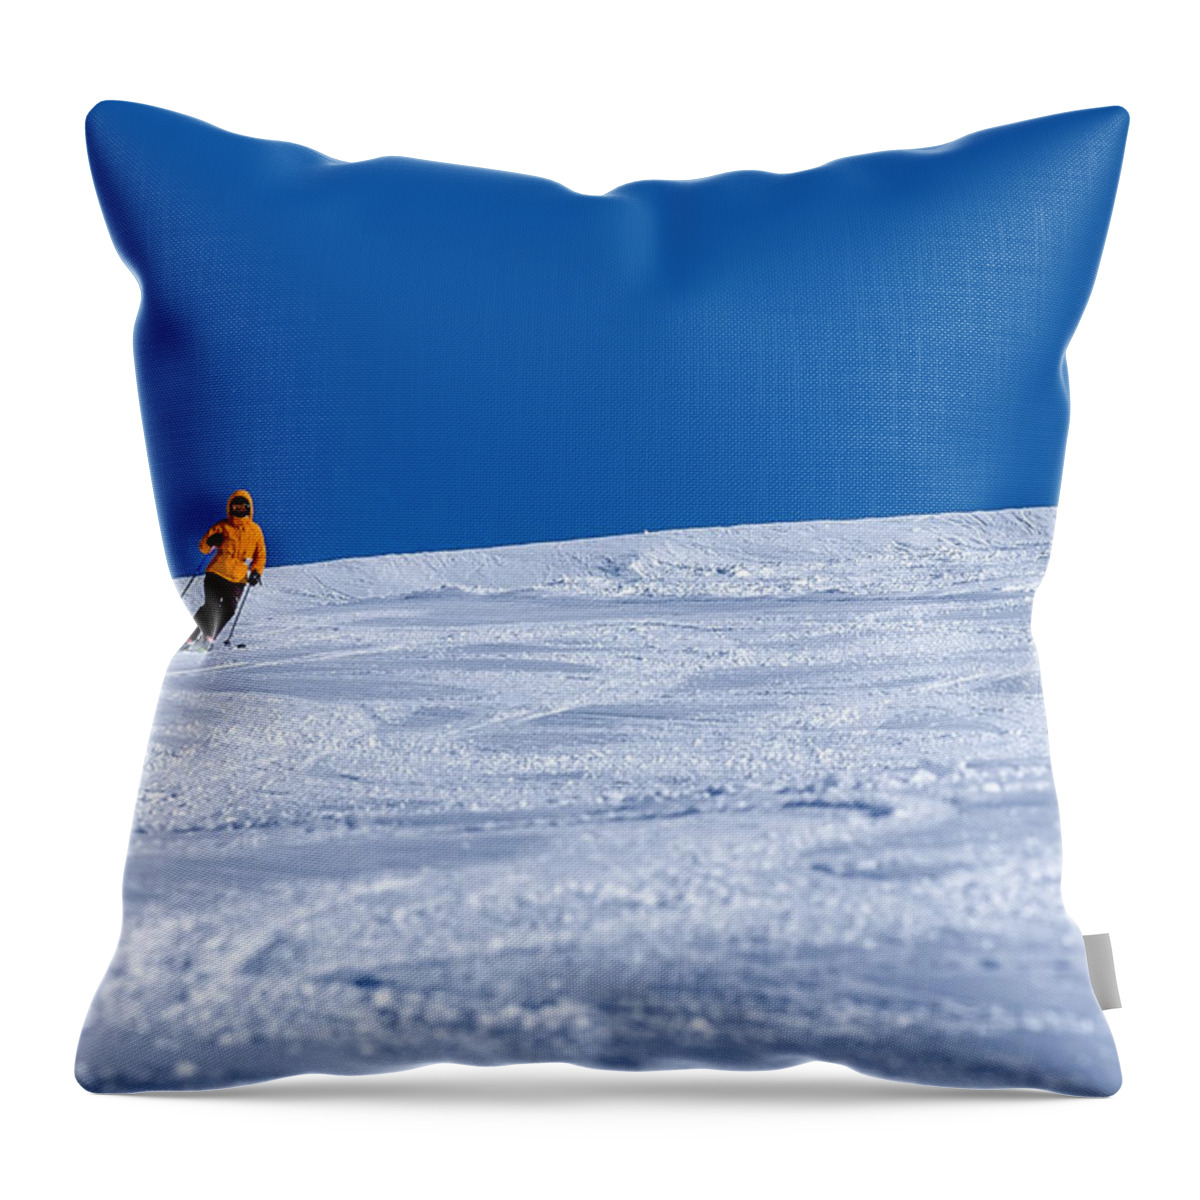 Blue Throw Pillow featuring the photograph First Run by Sebastian Musial